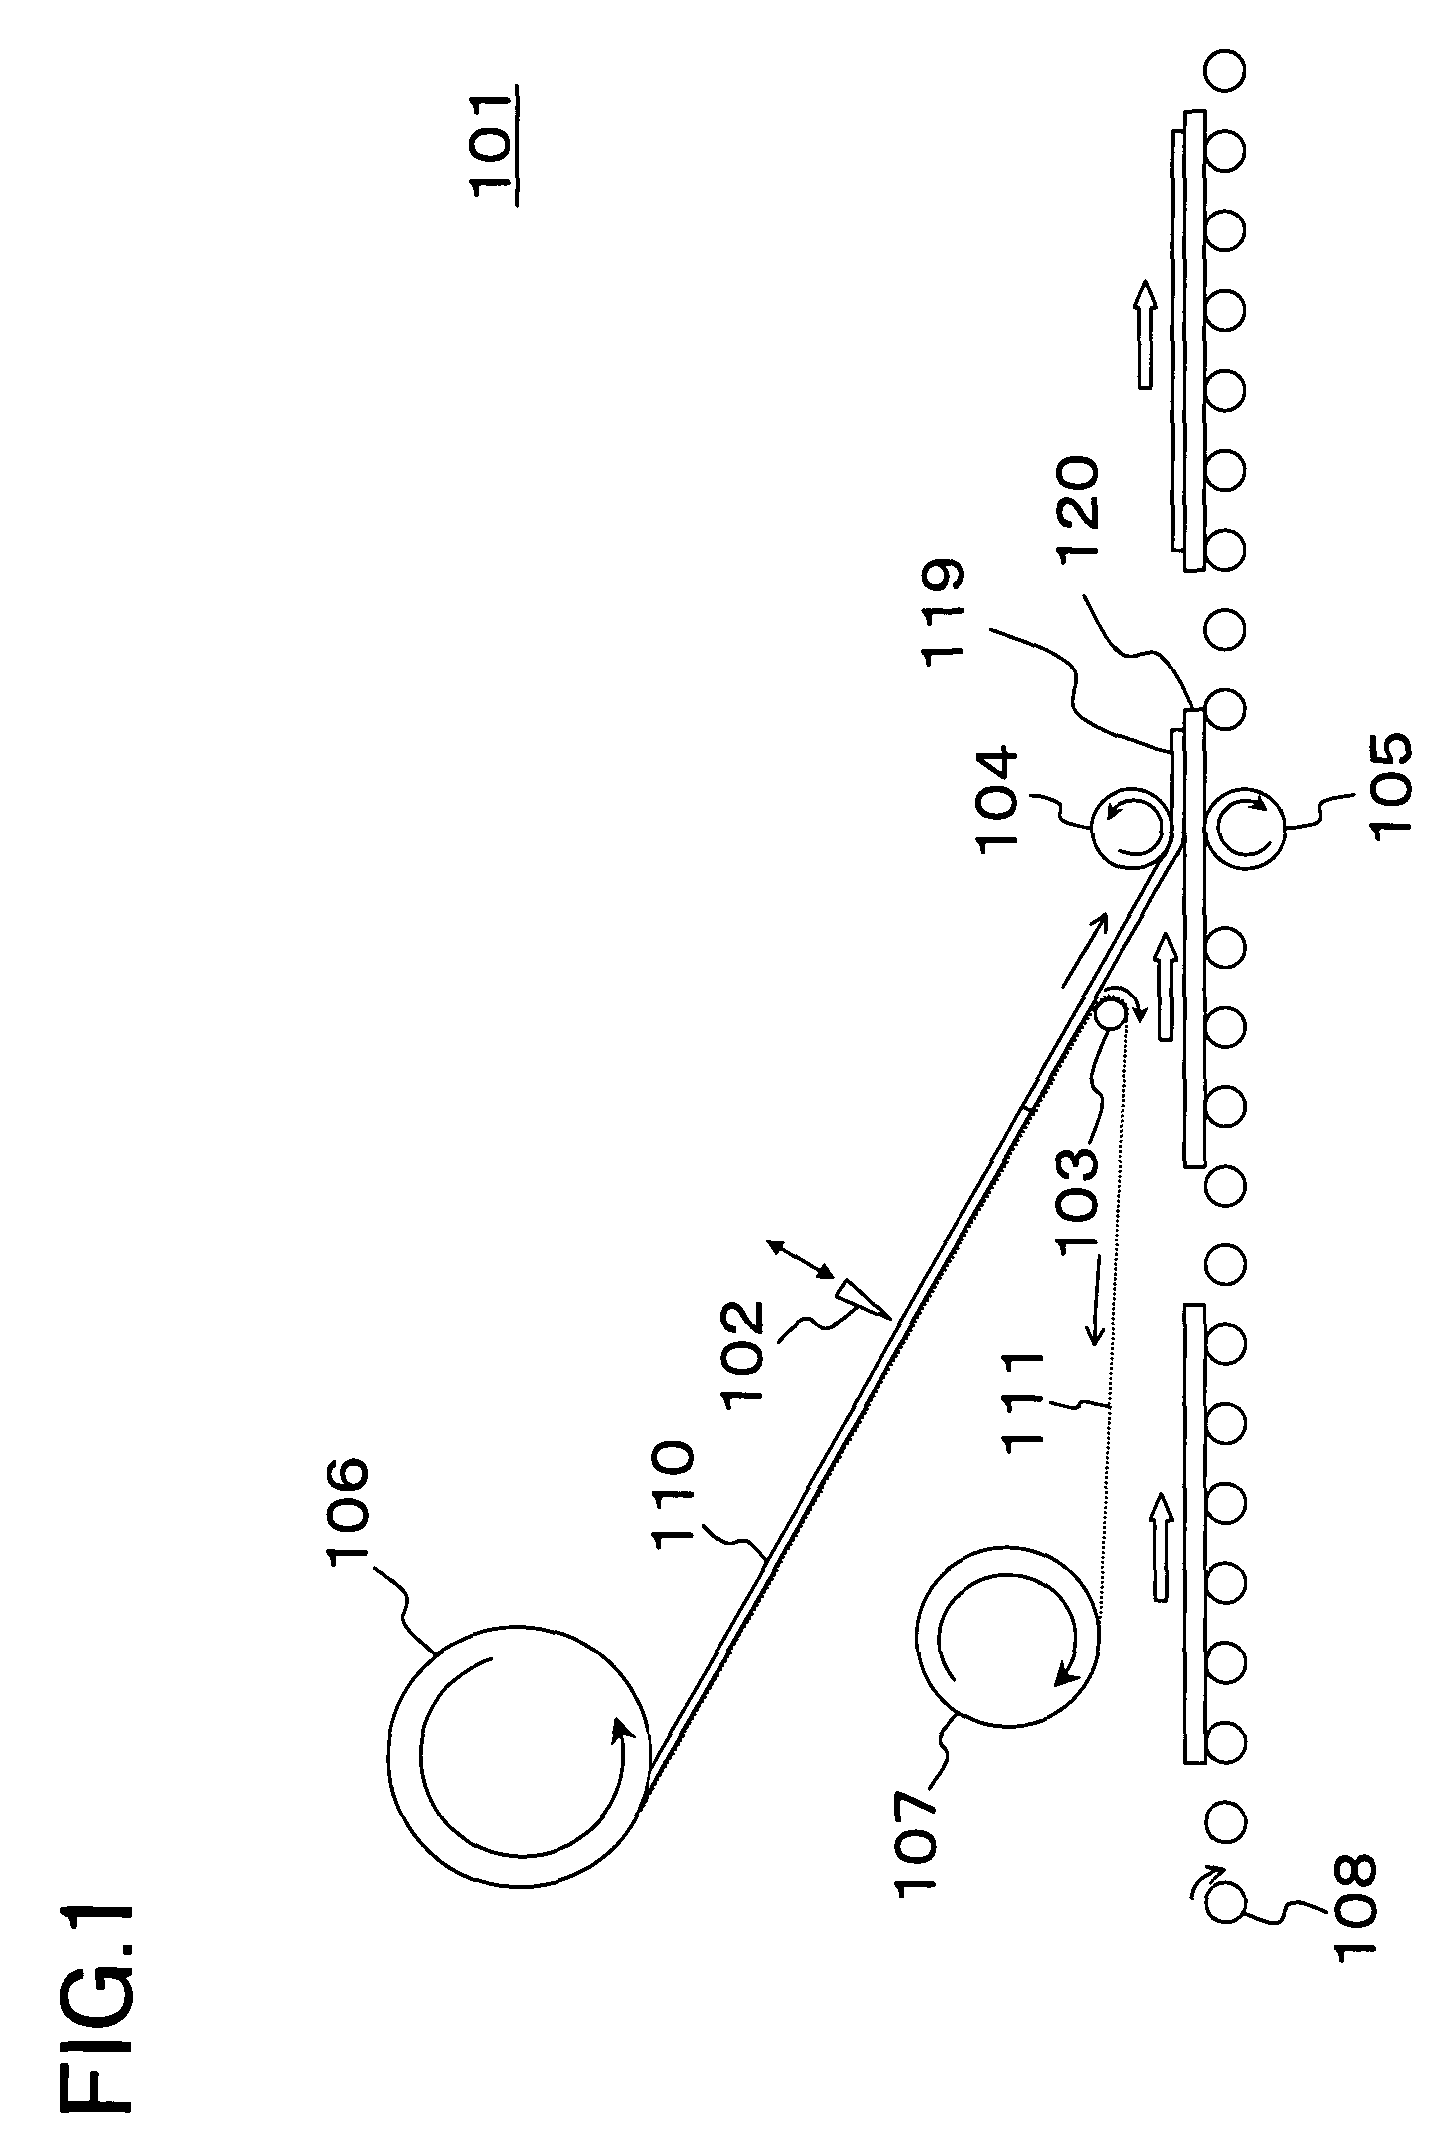 Method and apparatus for bonding polarizing plate